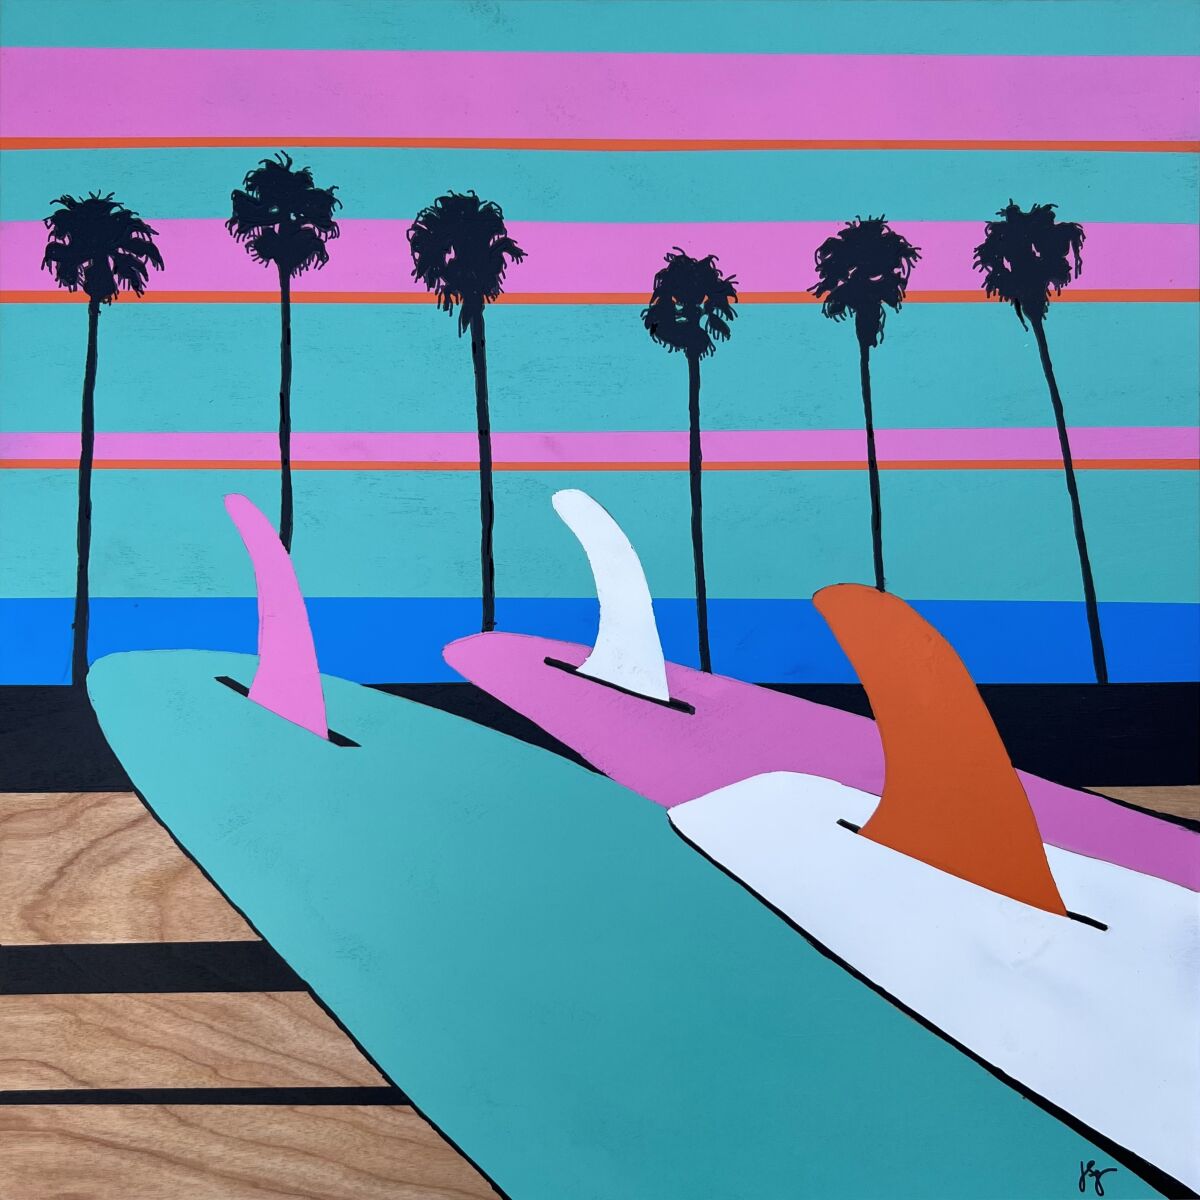 "Surf Boomers" by Jon Savage